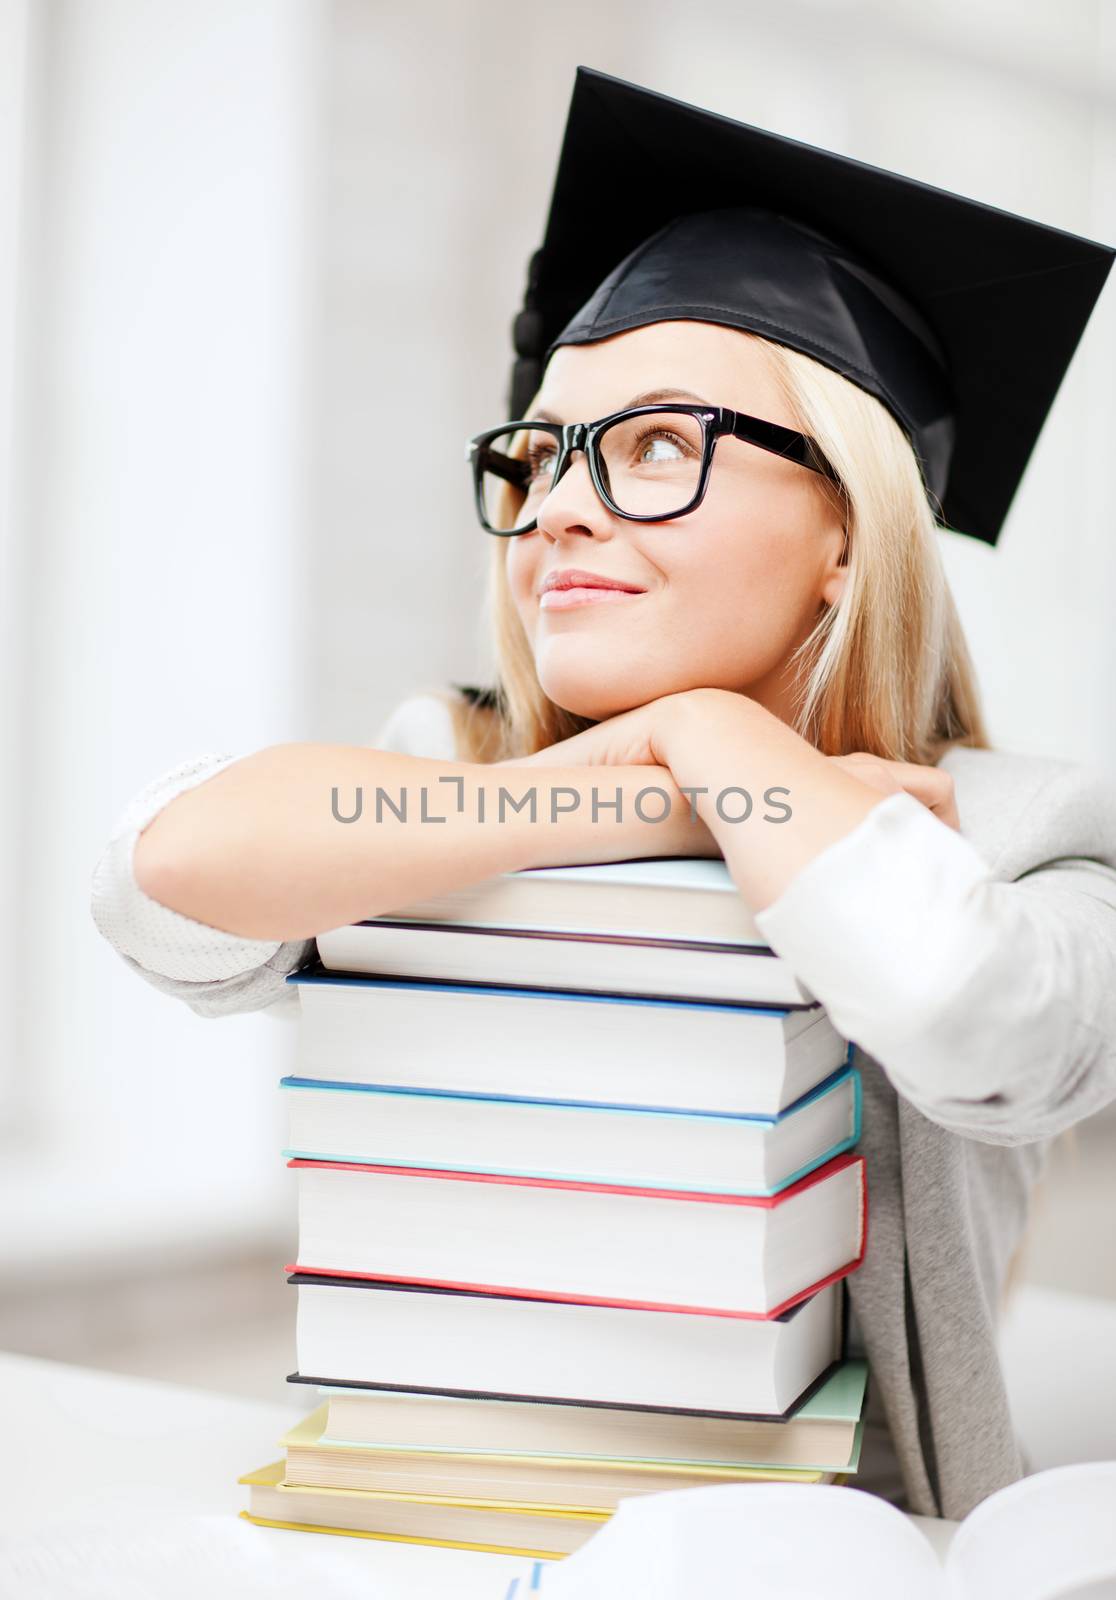 student in graduation cap by dolgachov